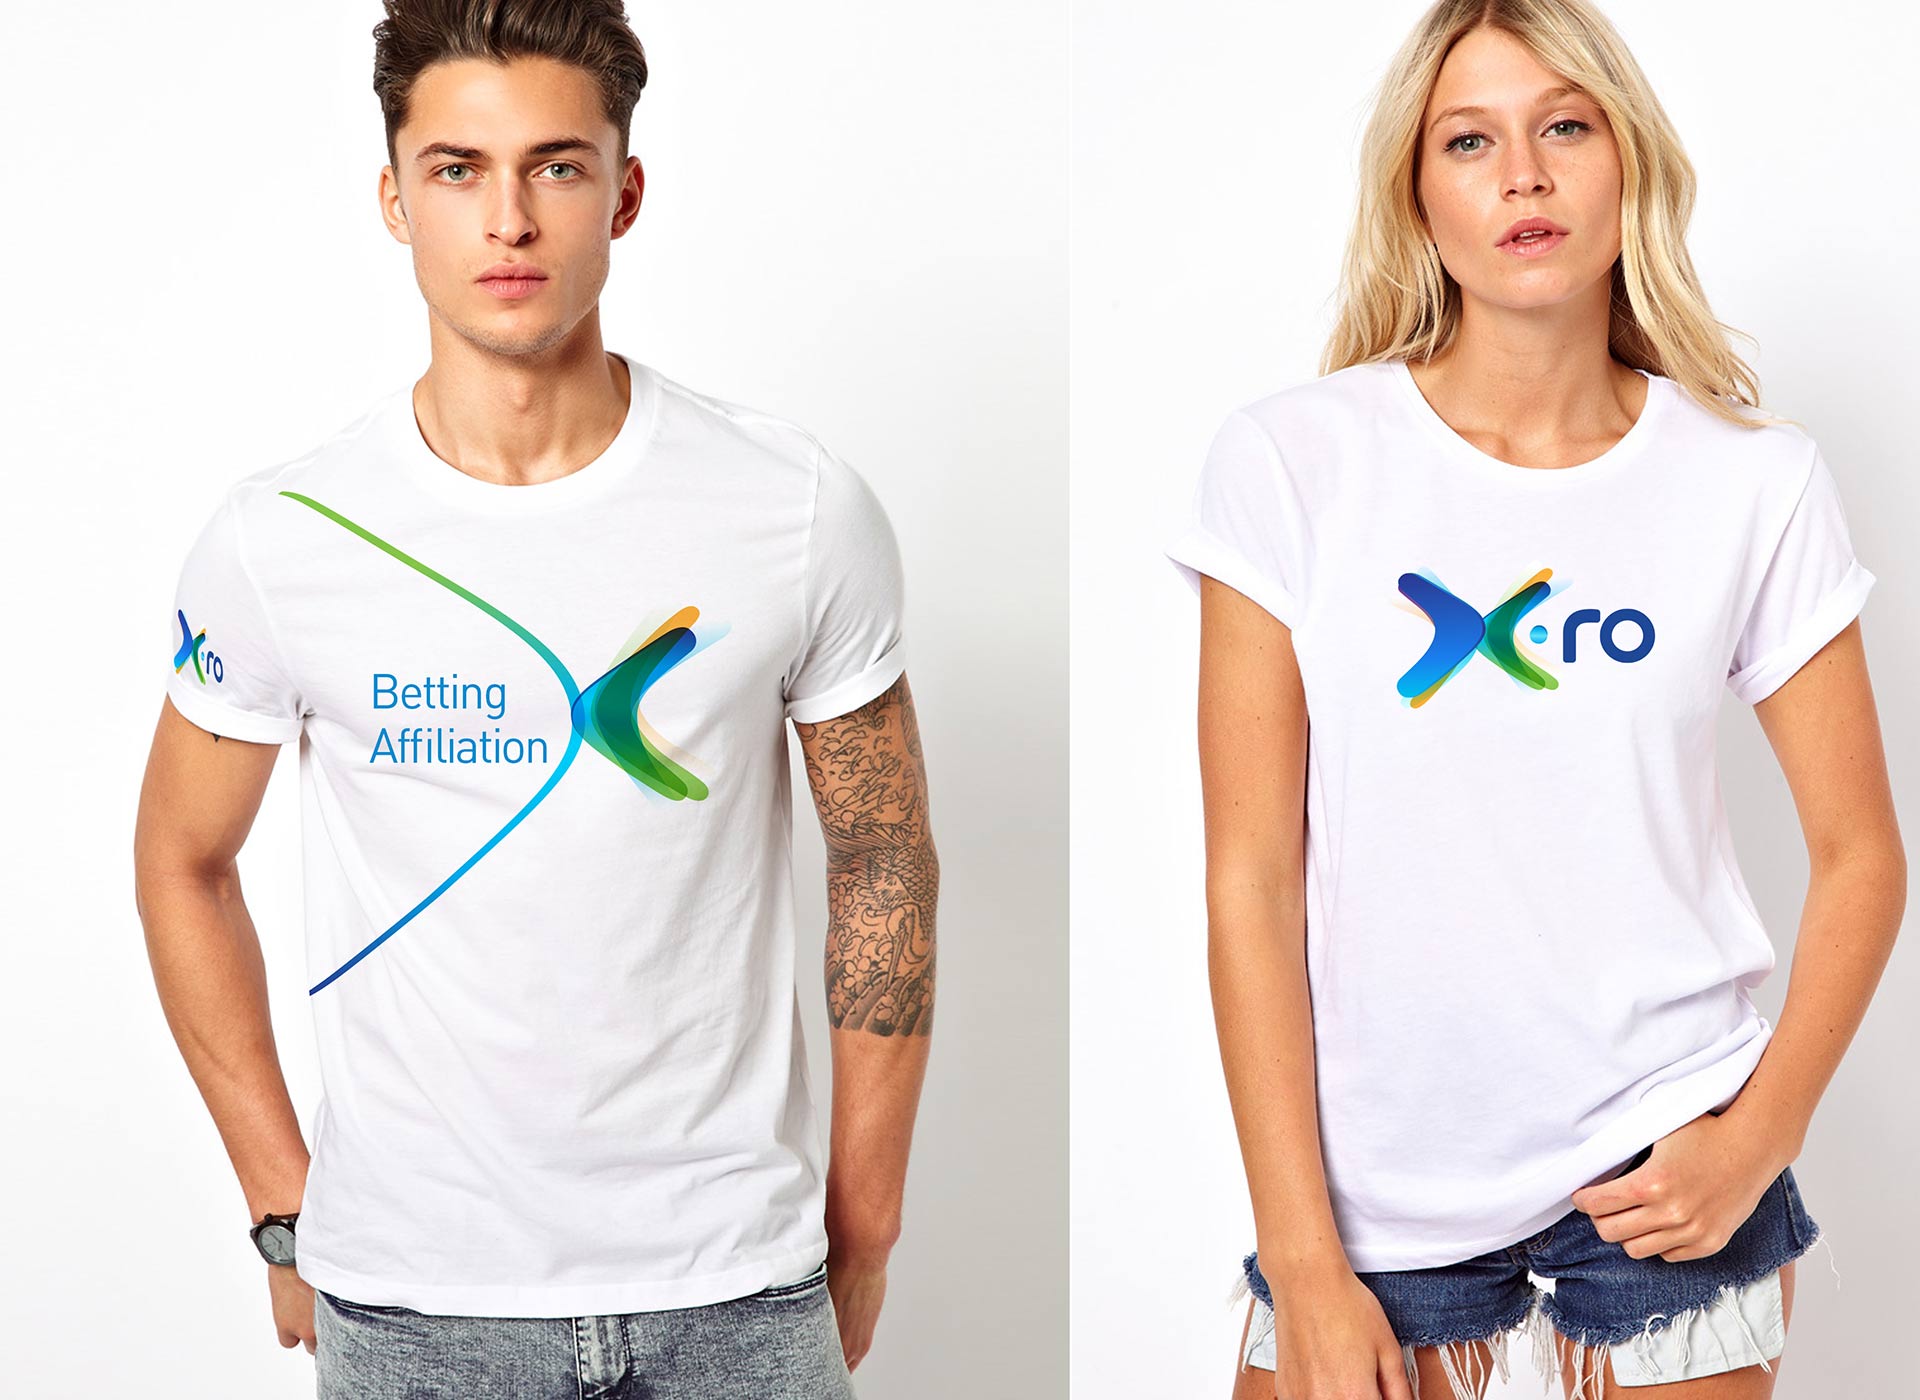 X.ro portfolio inoveo shirt